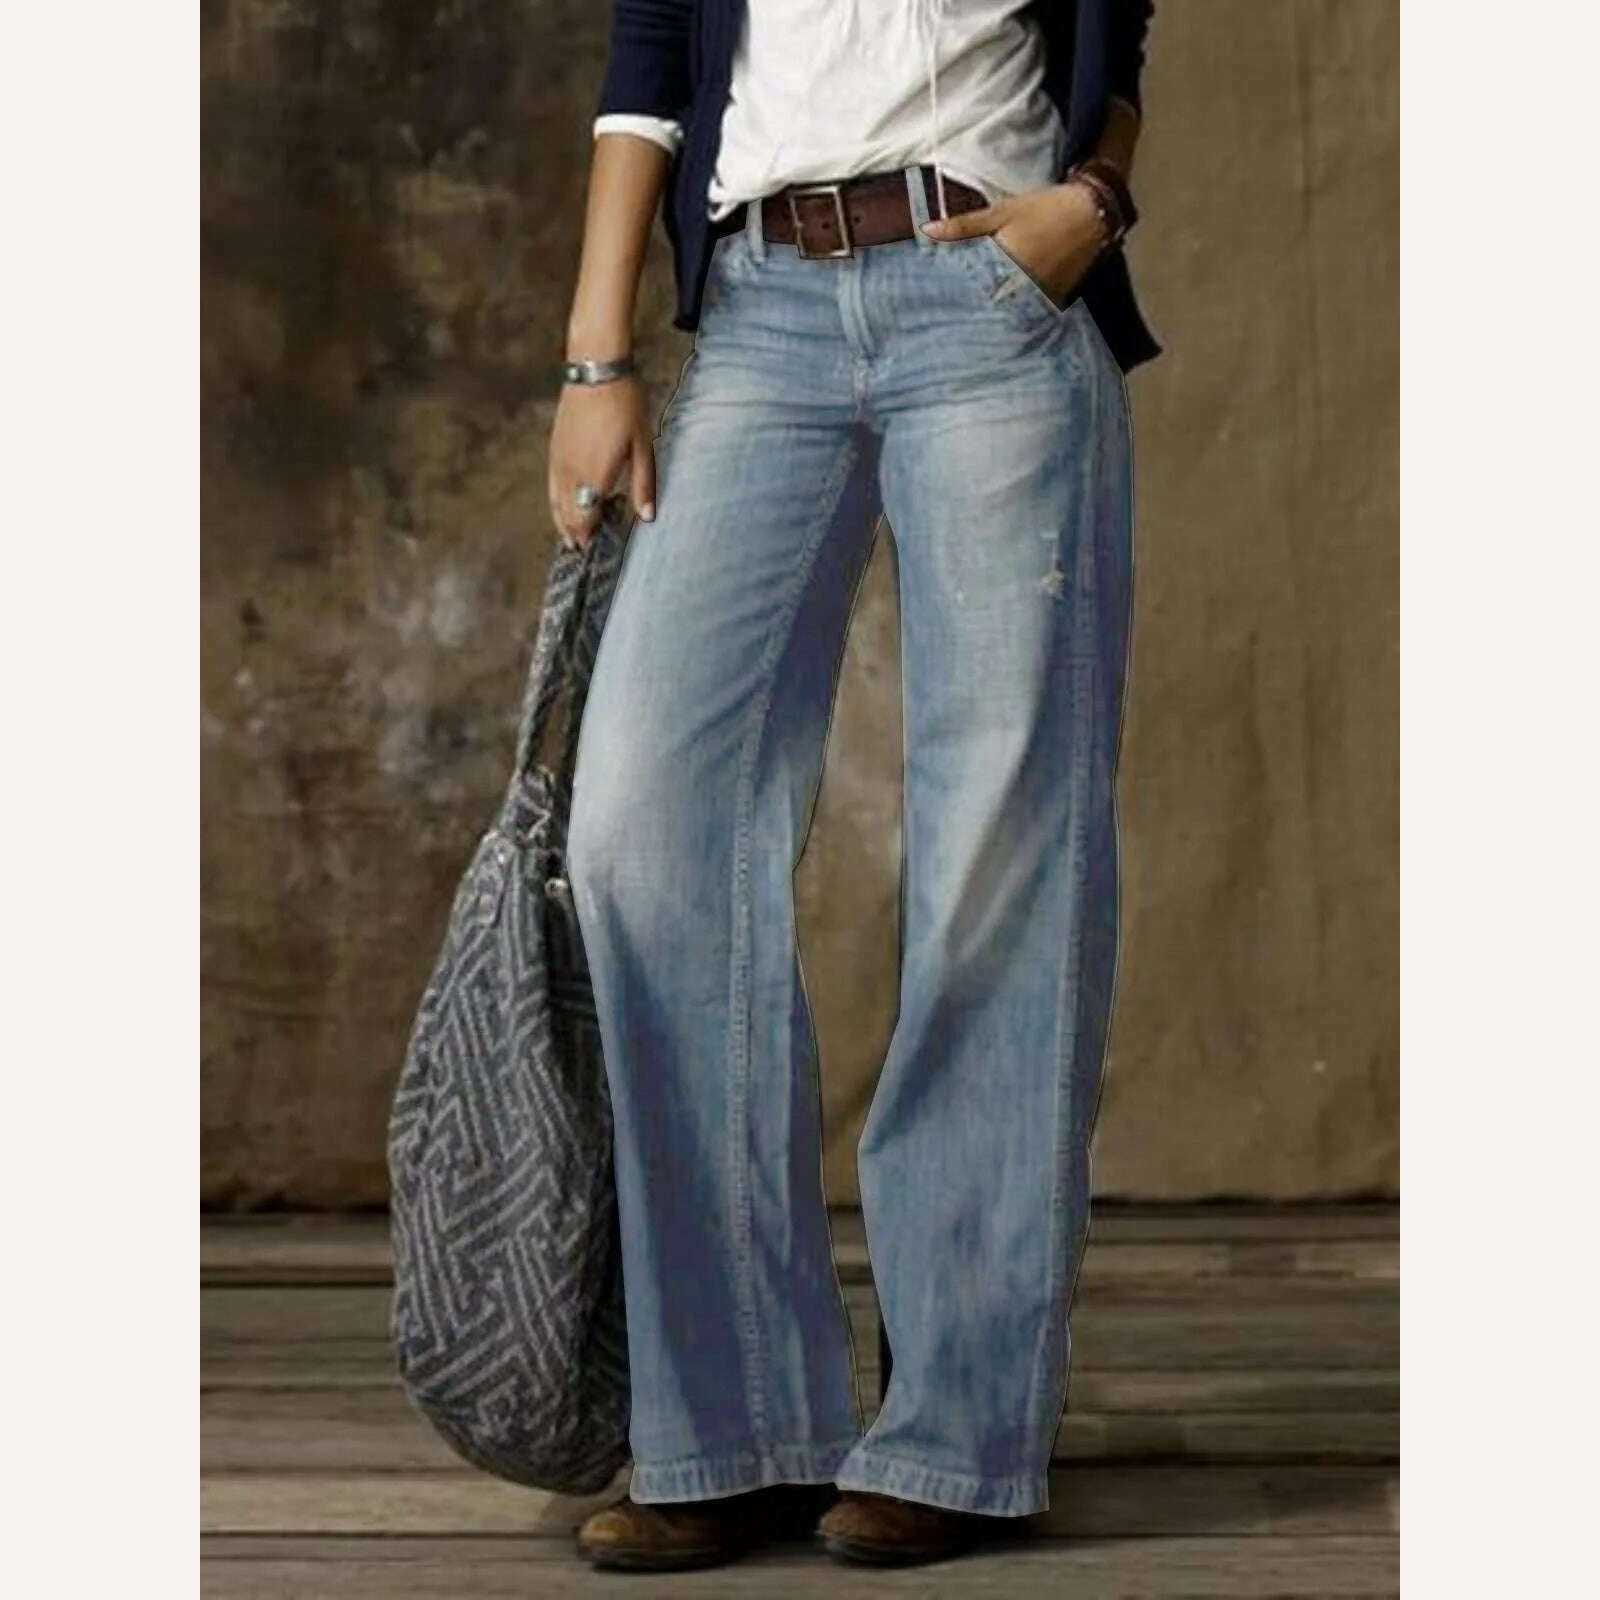 KIMLUD, Vintage Style Jeans Women Loose Wide Leg Trousers Fashion Harajuku Streetwear Straight Denim Pants, Light blue / S, KIMLUD Women's Clothes